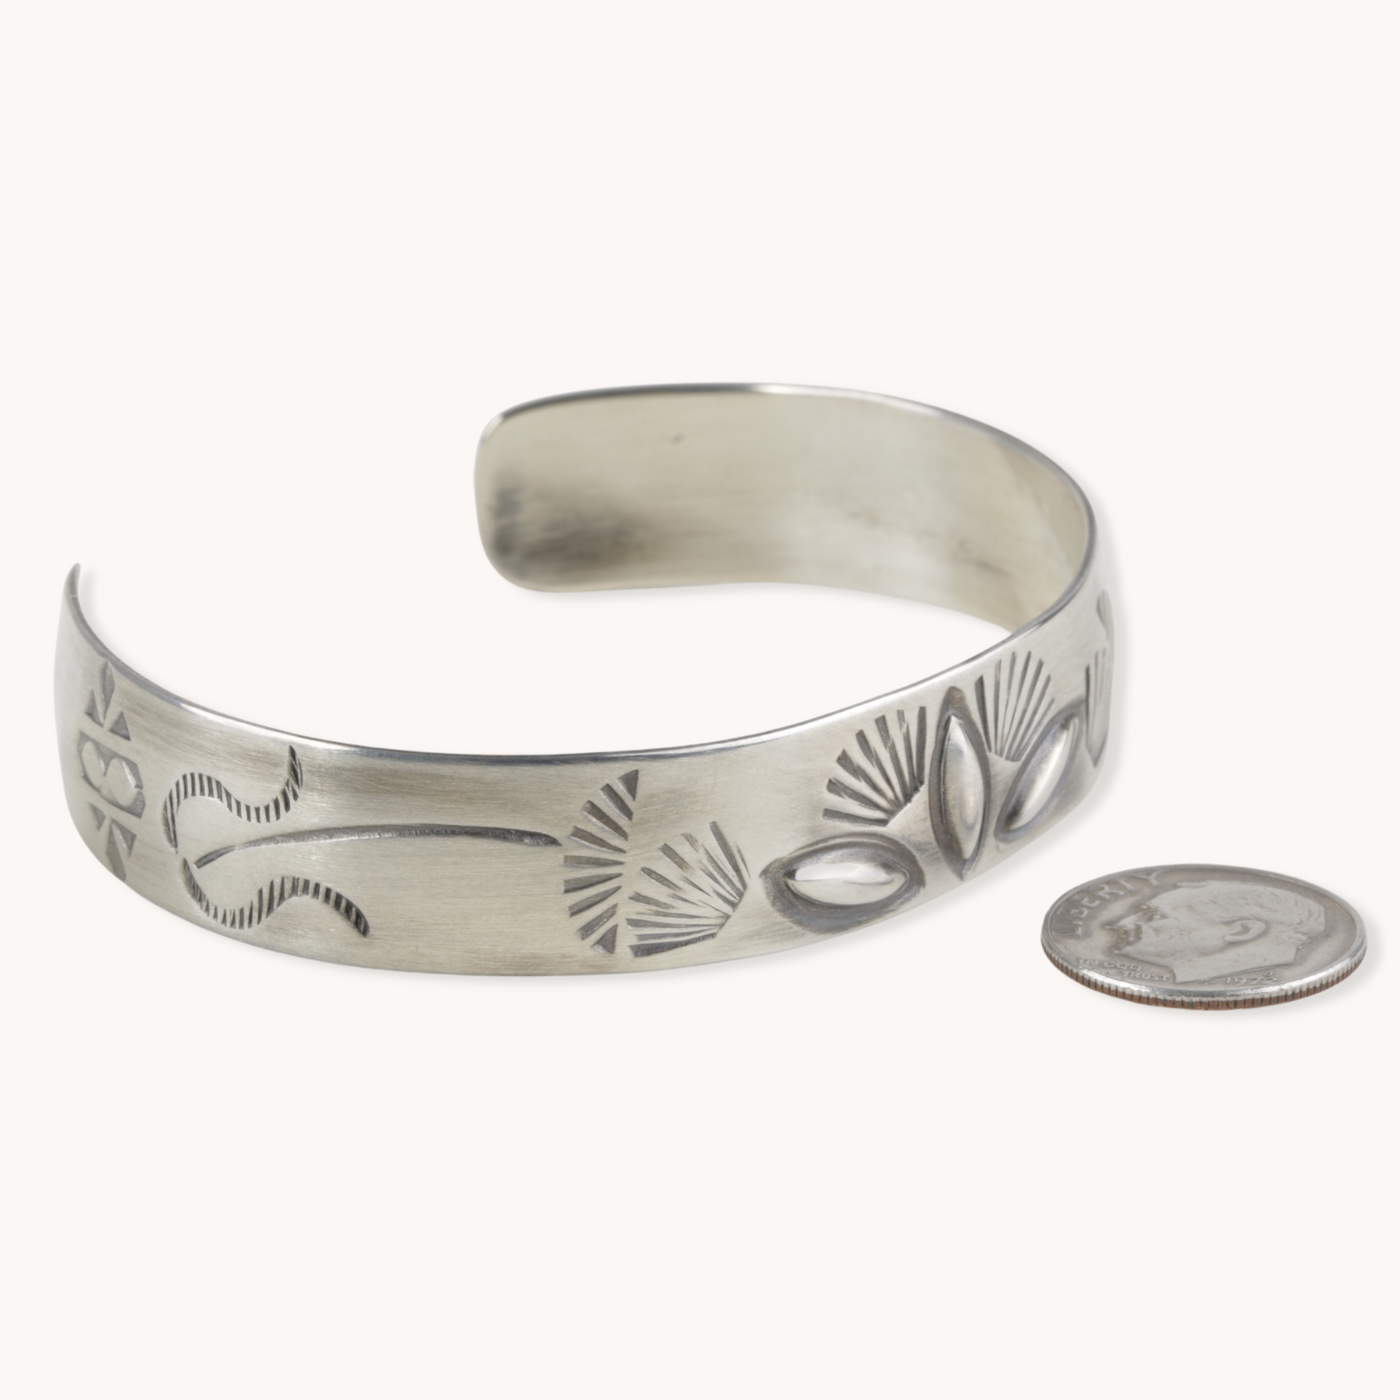 Native American Sterling Silver Cuff Bracelet, Adjustable Sizing